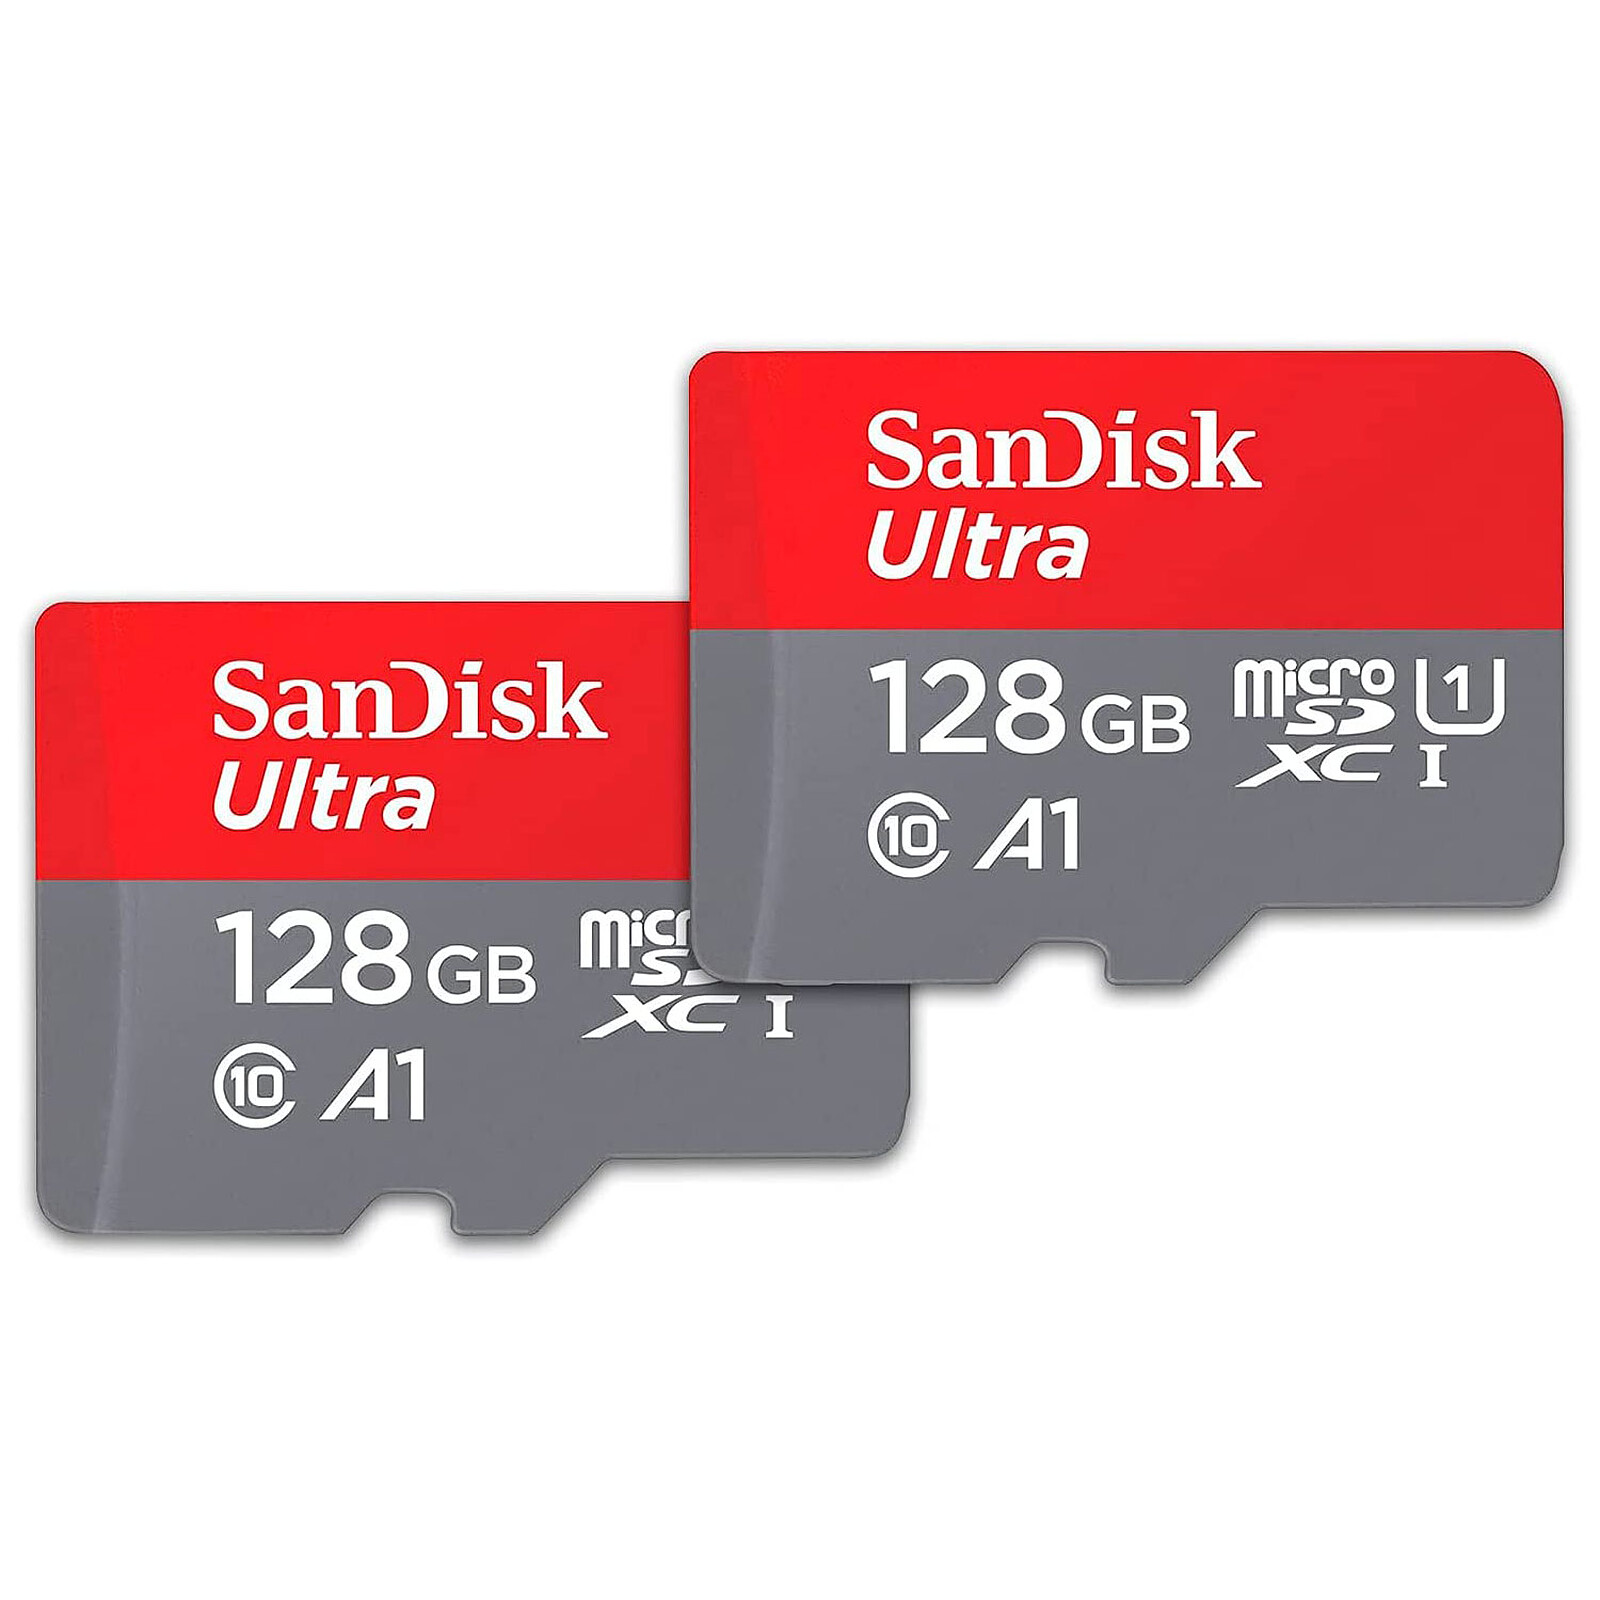 SanDisk Carte Mémoire Ultra microSDXC UHS-I 256 Go + Adaptateur SD